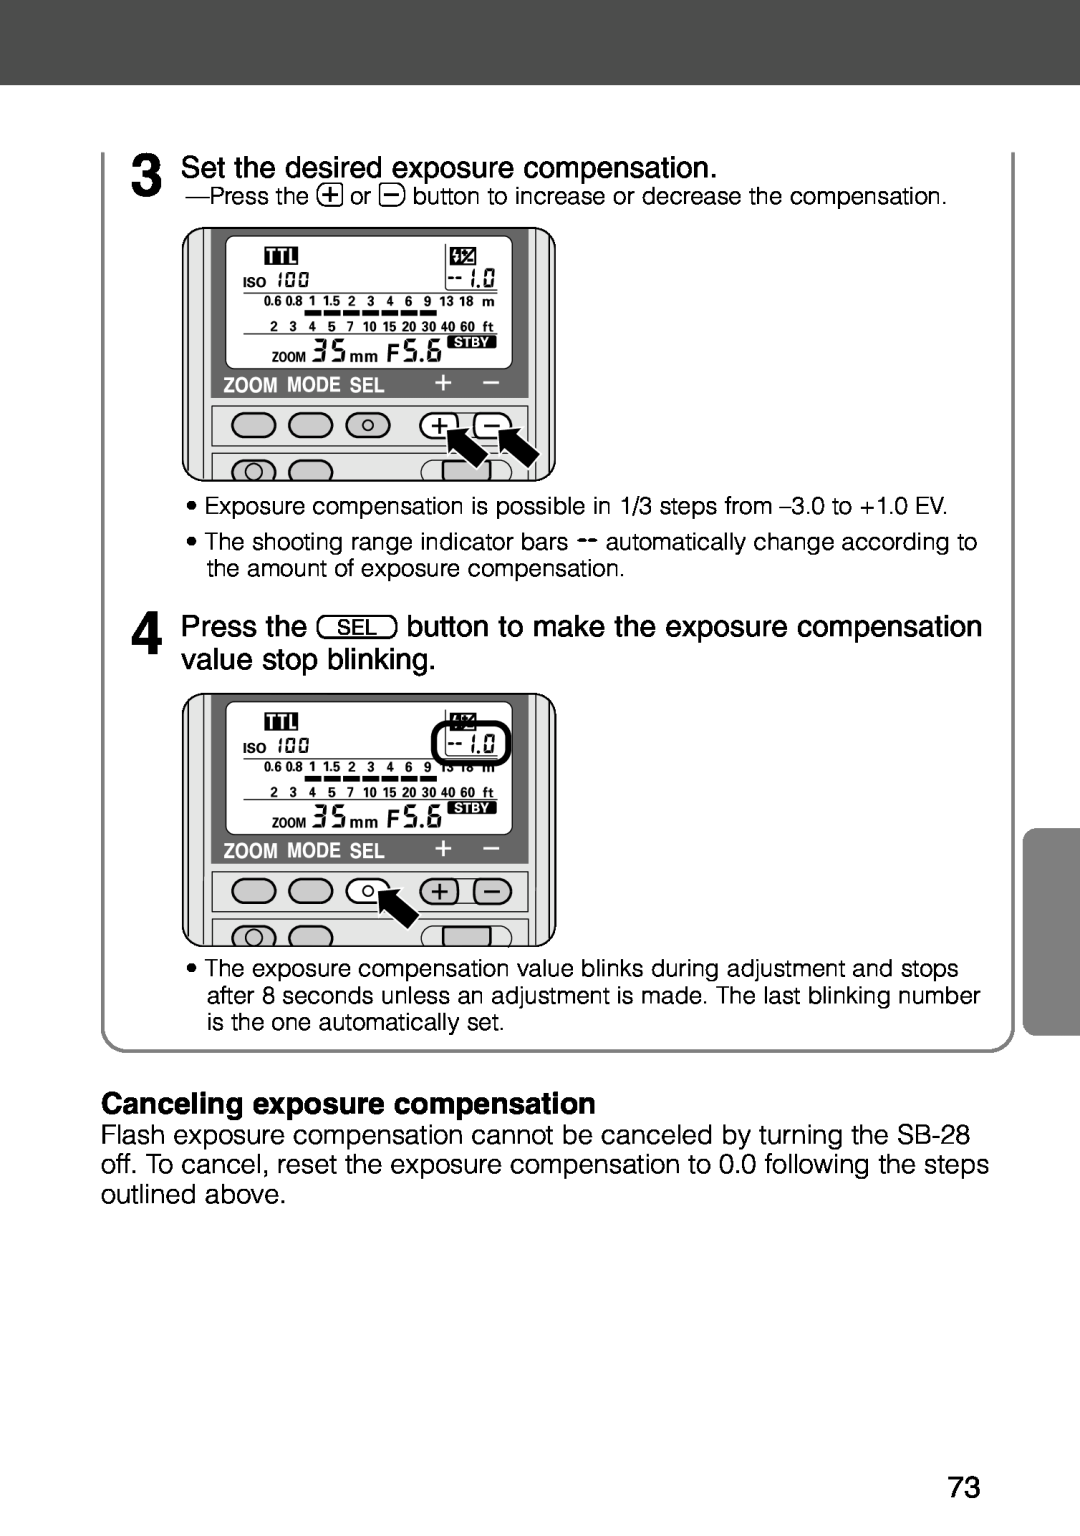 Nikon SB-28 instruction manual 3Set the desired exposure compensation, Canceling exposure compensation 